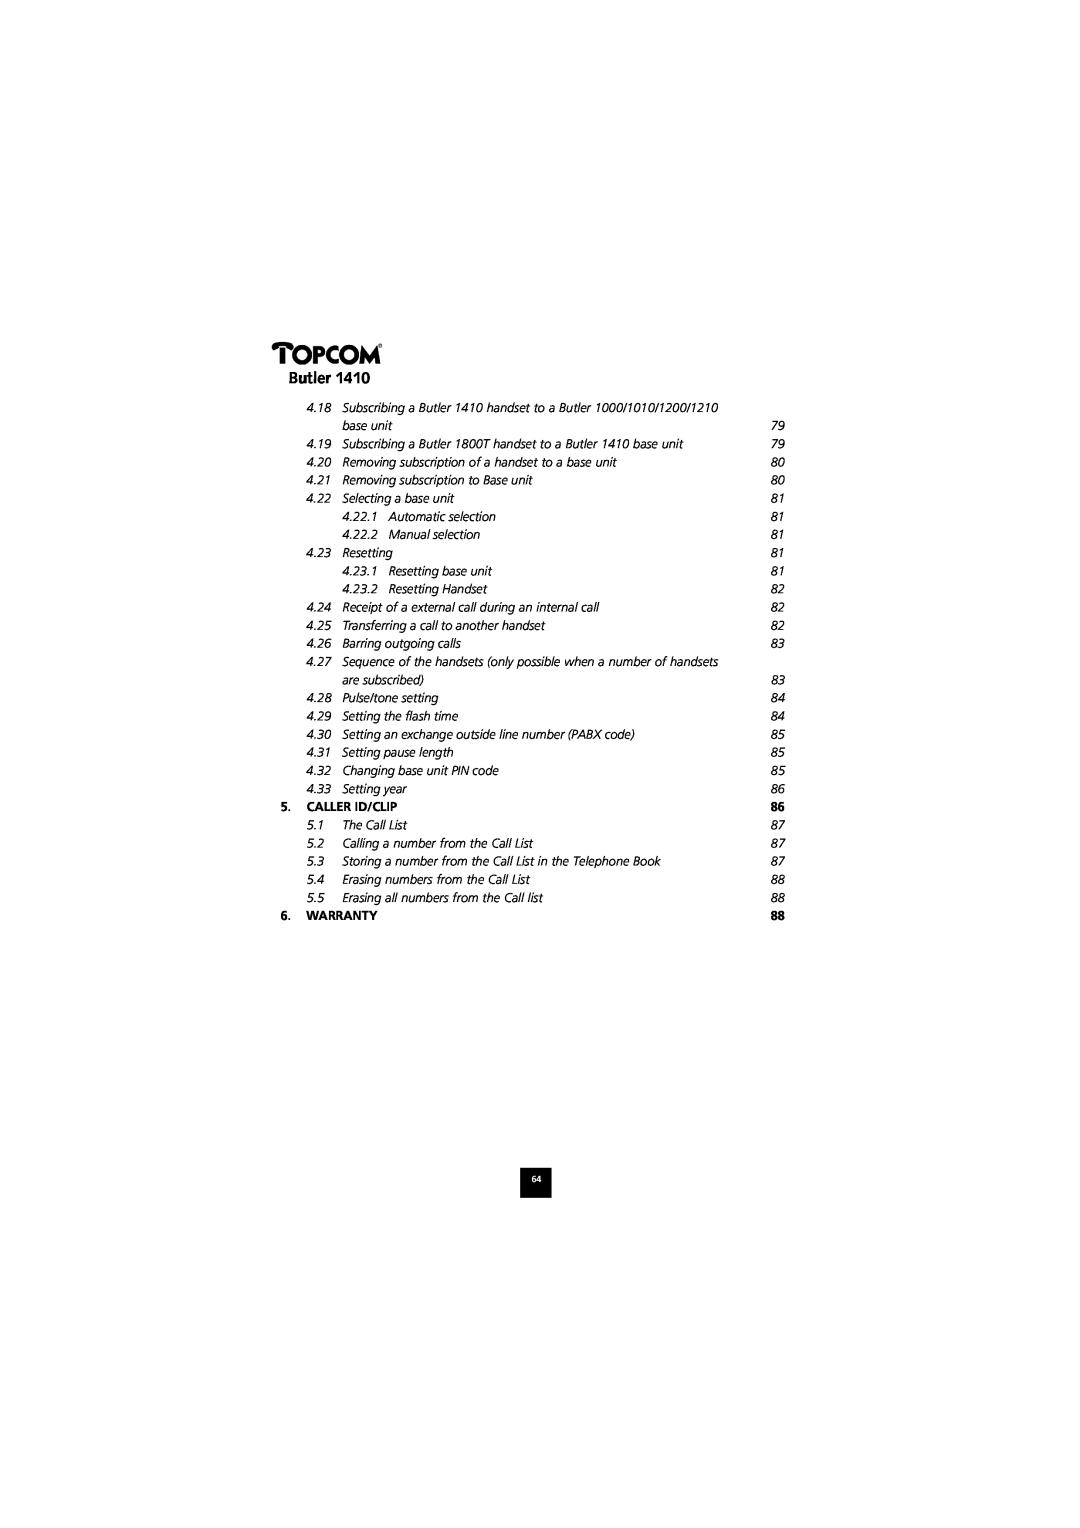 Topcom 1410 manual Butler, Caller Id/Clip, Warranty 